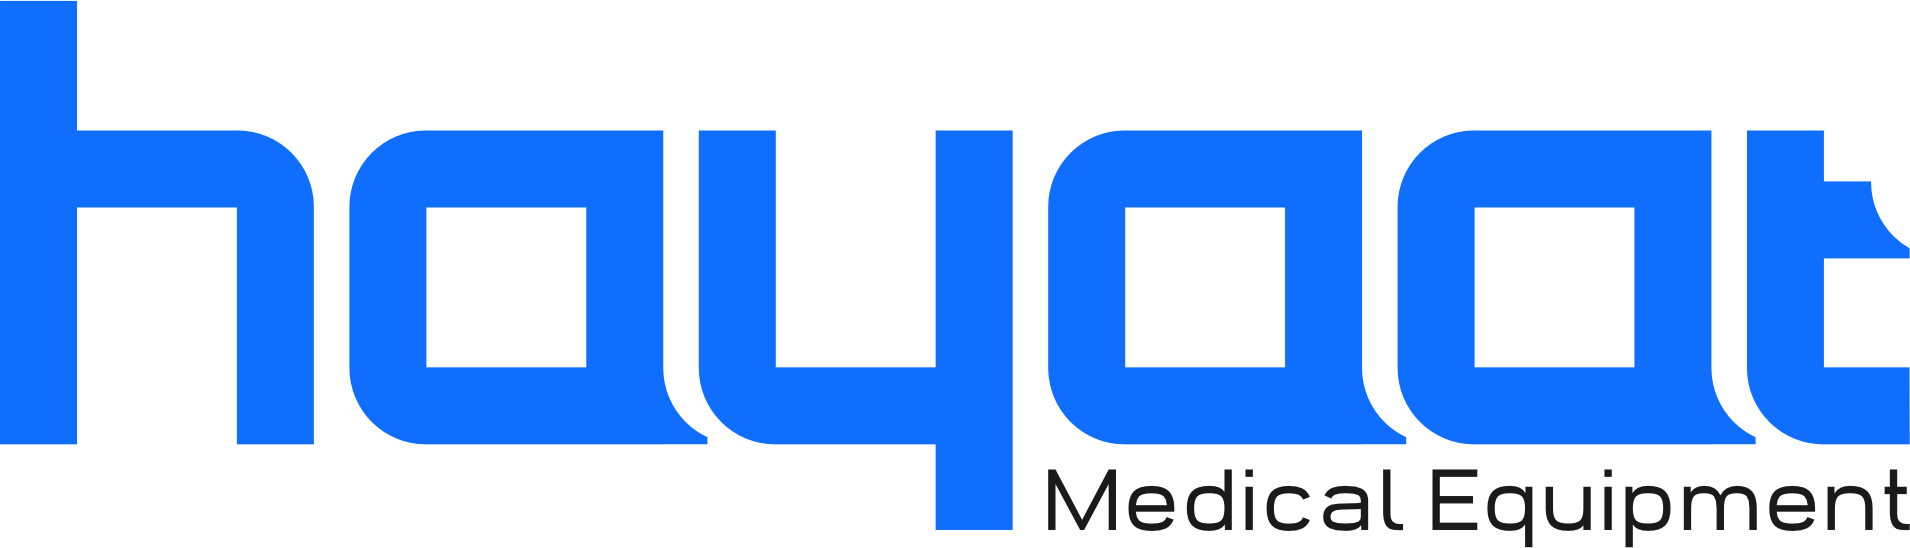 Website logo blue